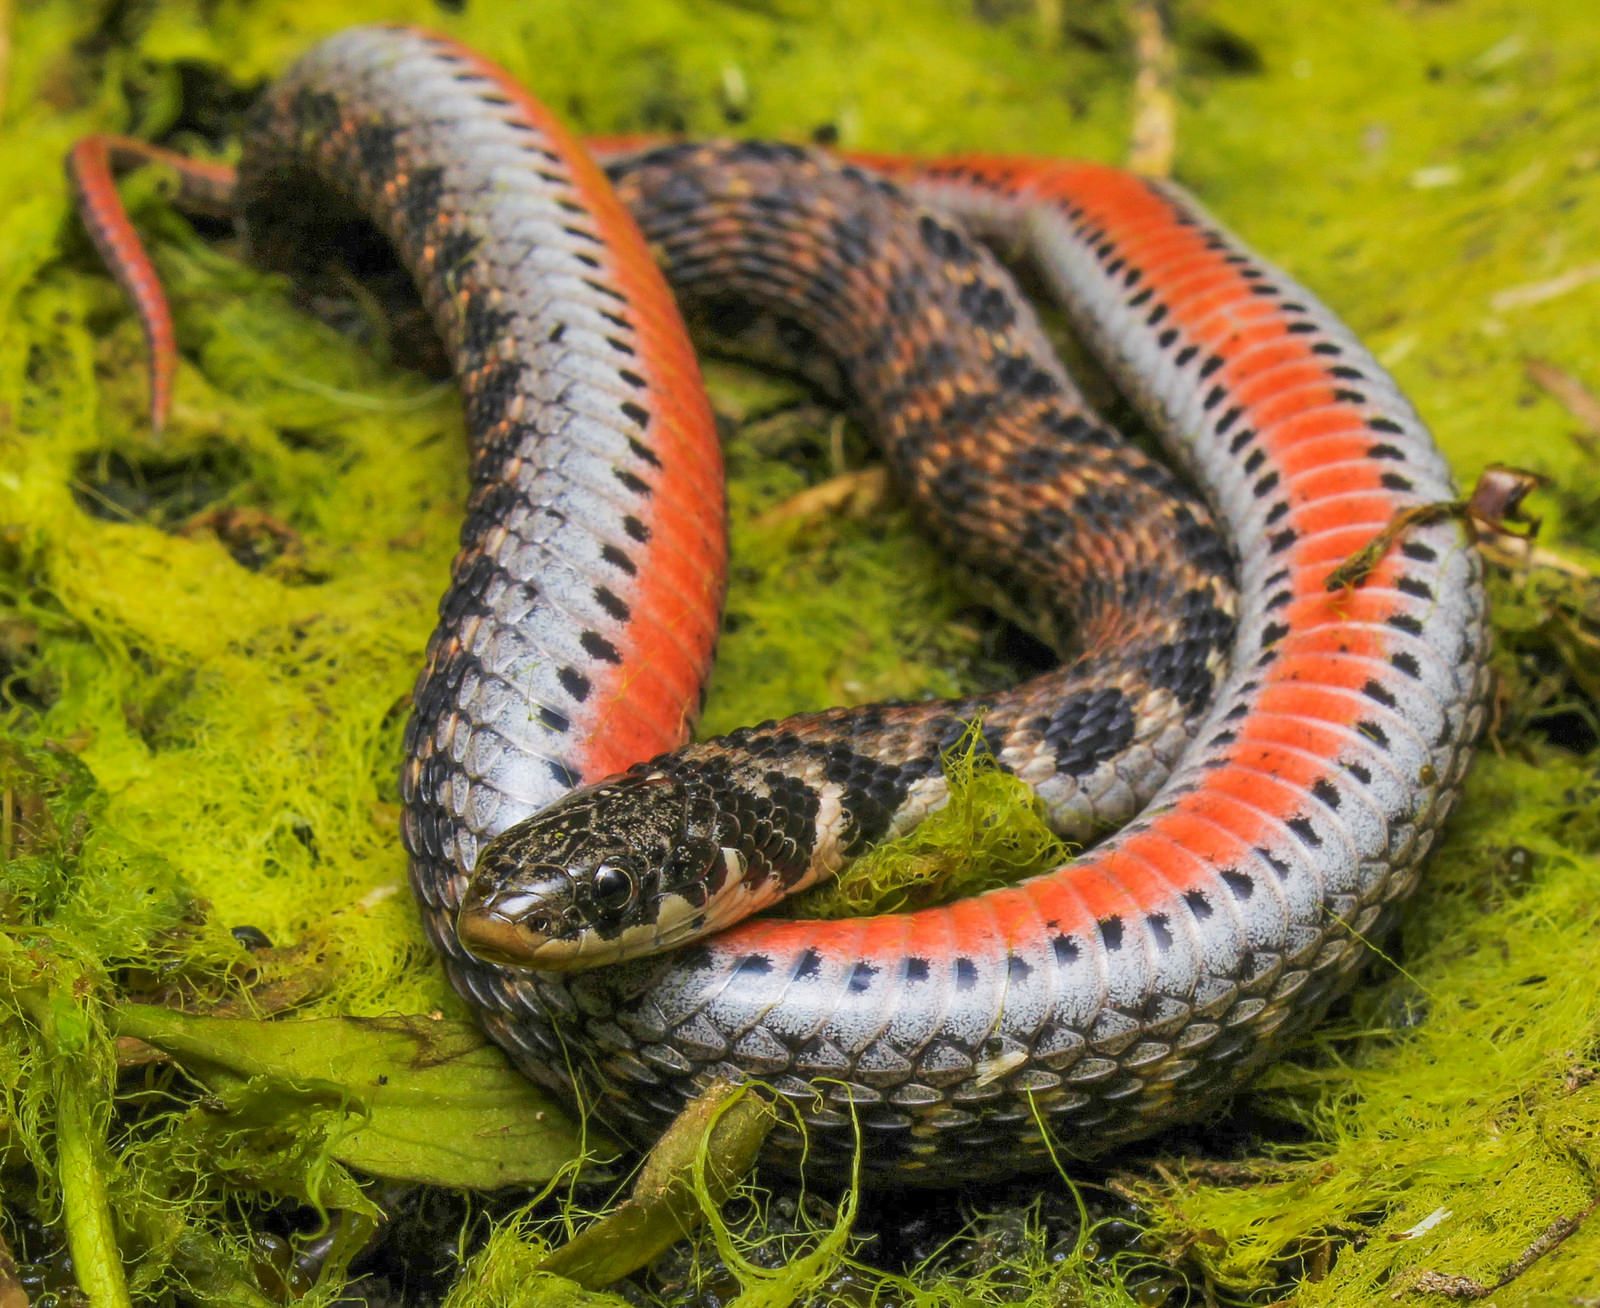 Kirtland's snake (Clonephis kirtlandii)